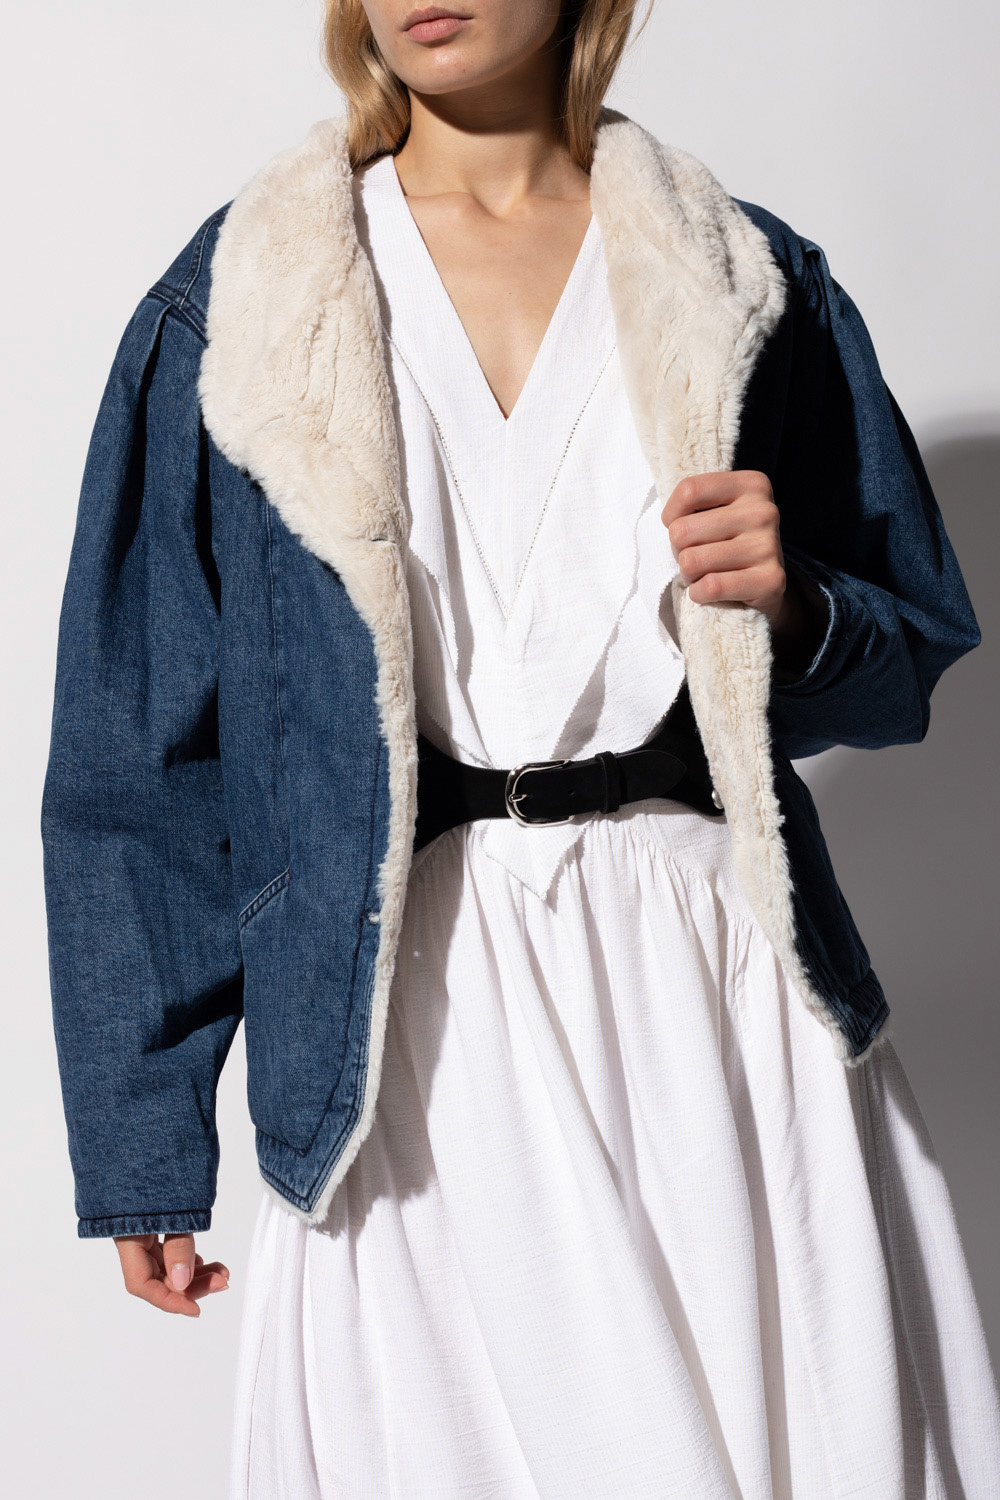 Produktion Awaken Kurve Isabel Marant Denim jacket | Women's Clothing | Vitkac